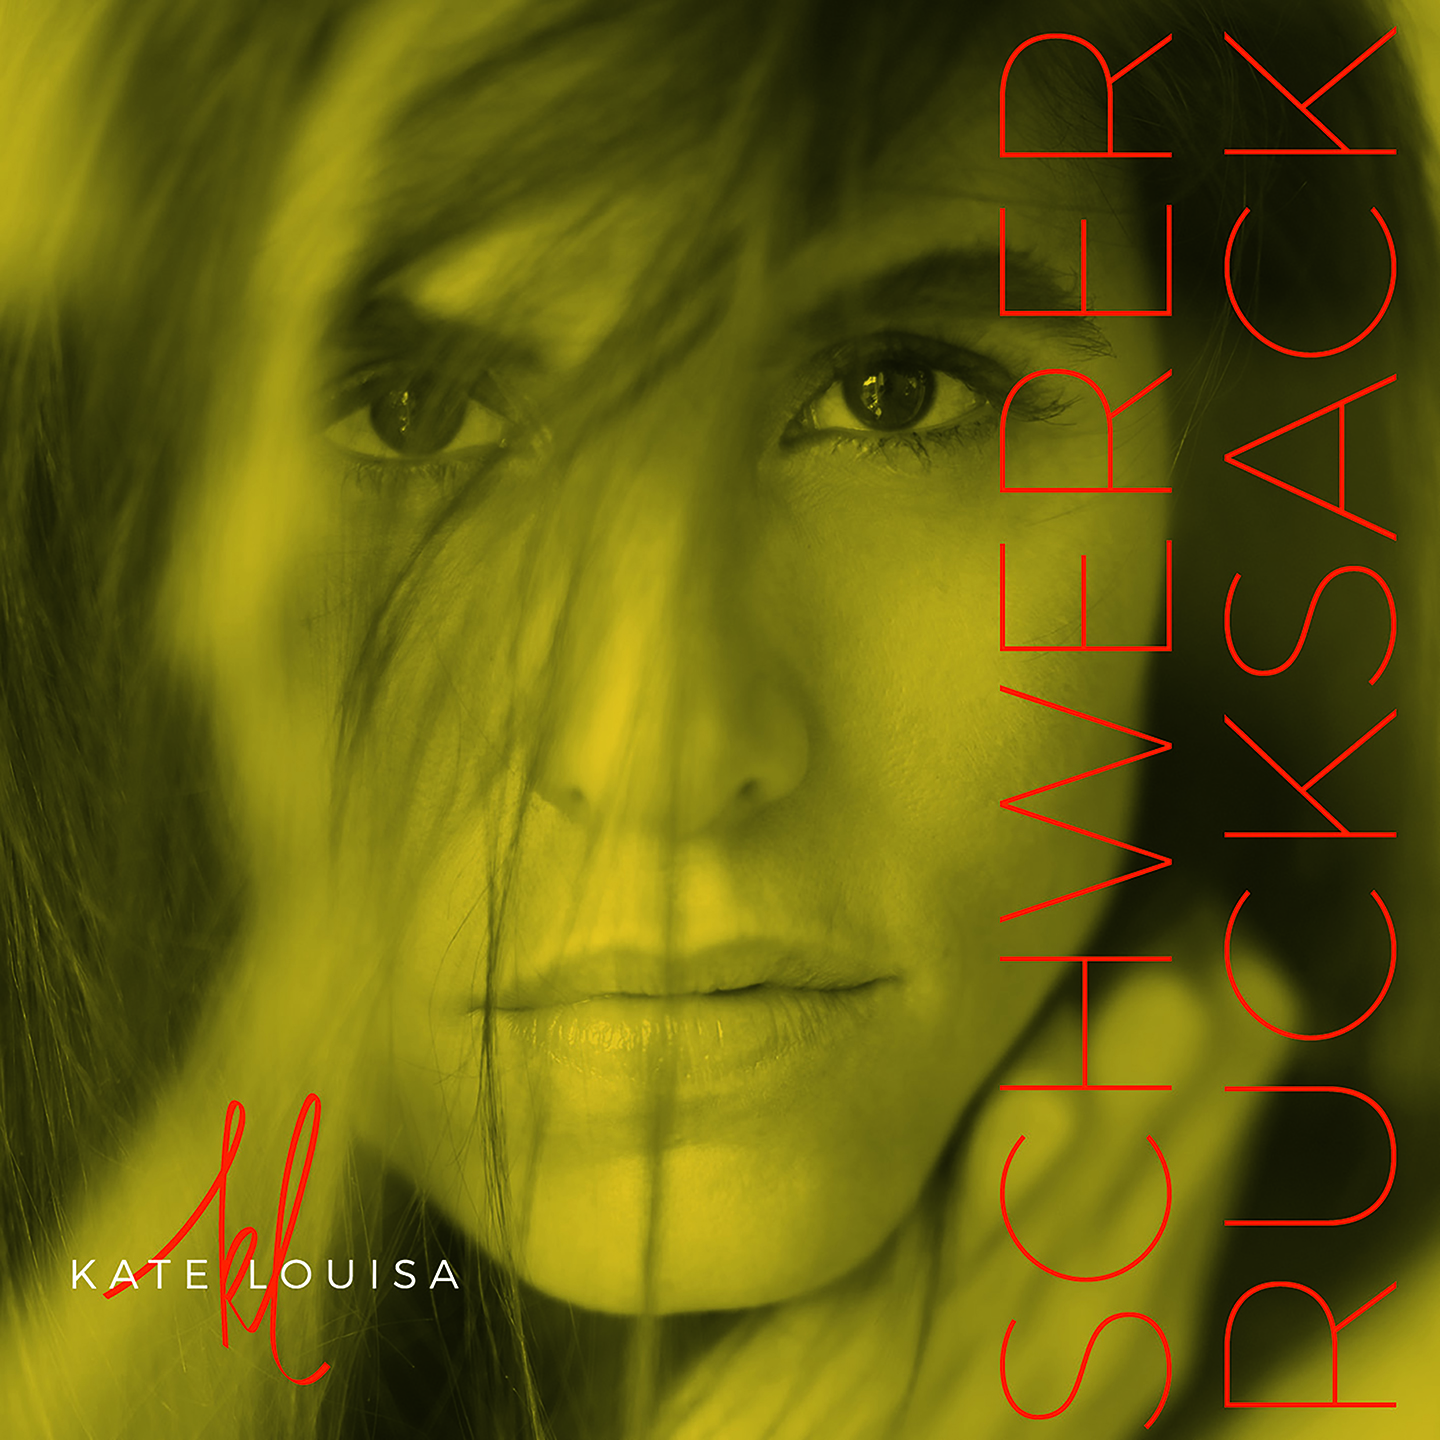 Kate Louisa - “Schwerer Rucksack“ (EP - Bassstadt) 